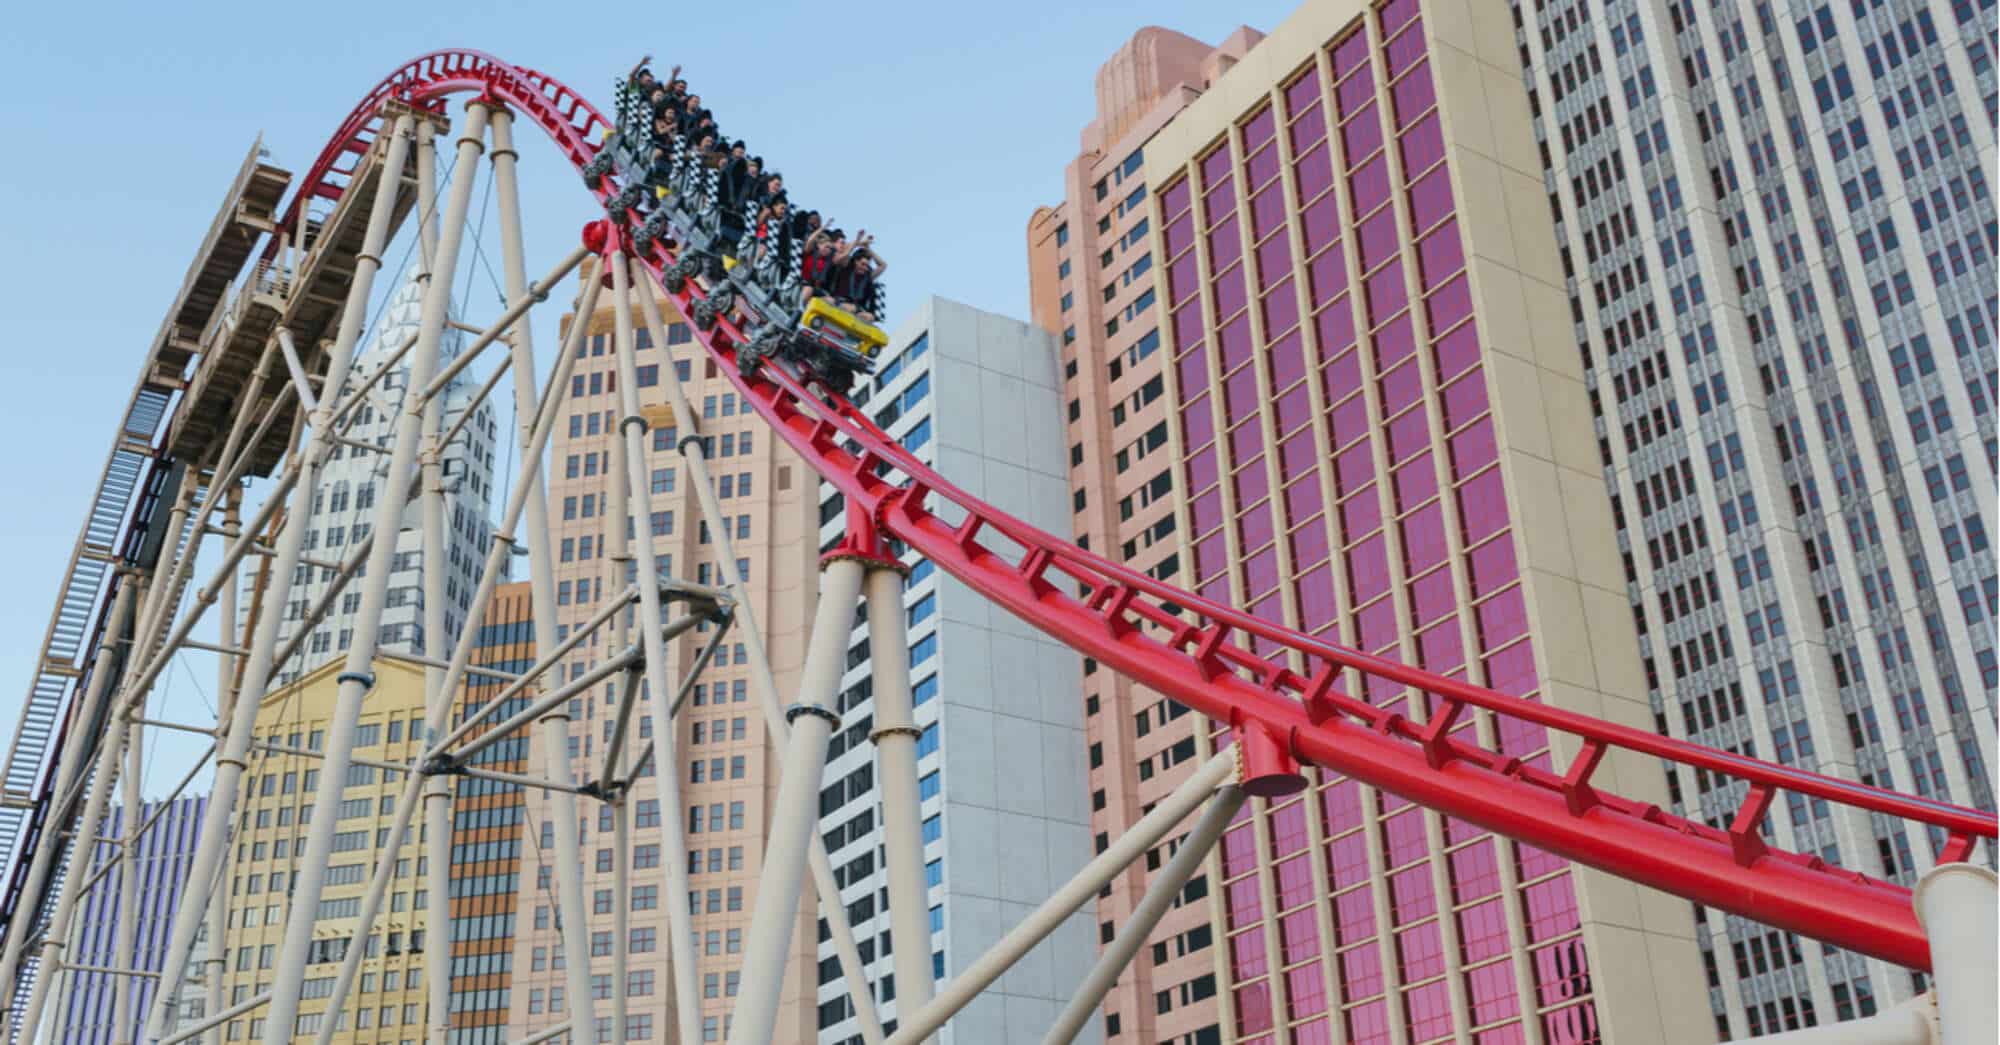 The Roller Coaster Las Vegas